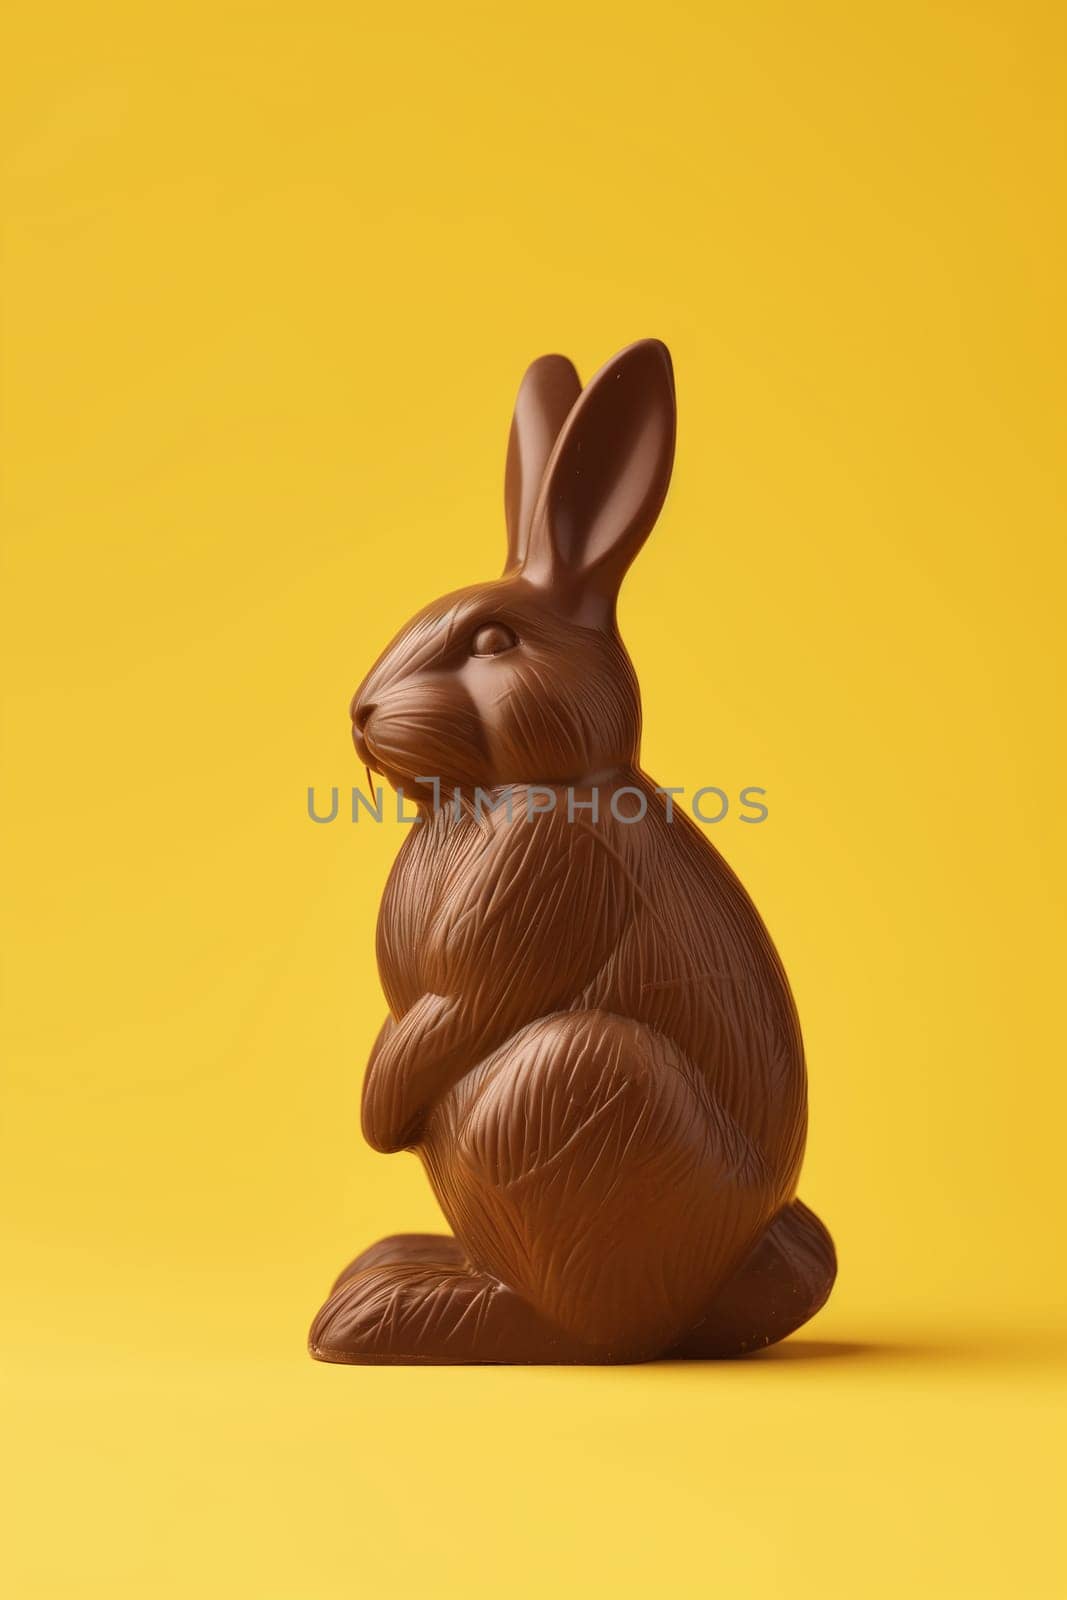 Chocolate Rabbit on Yellow Background Signaling Easter Celebration by chrisroll